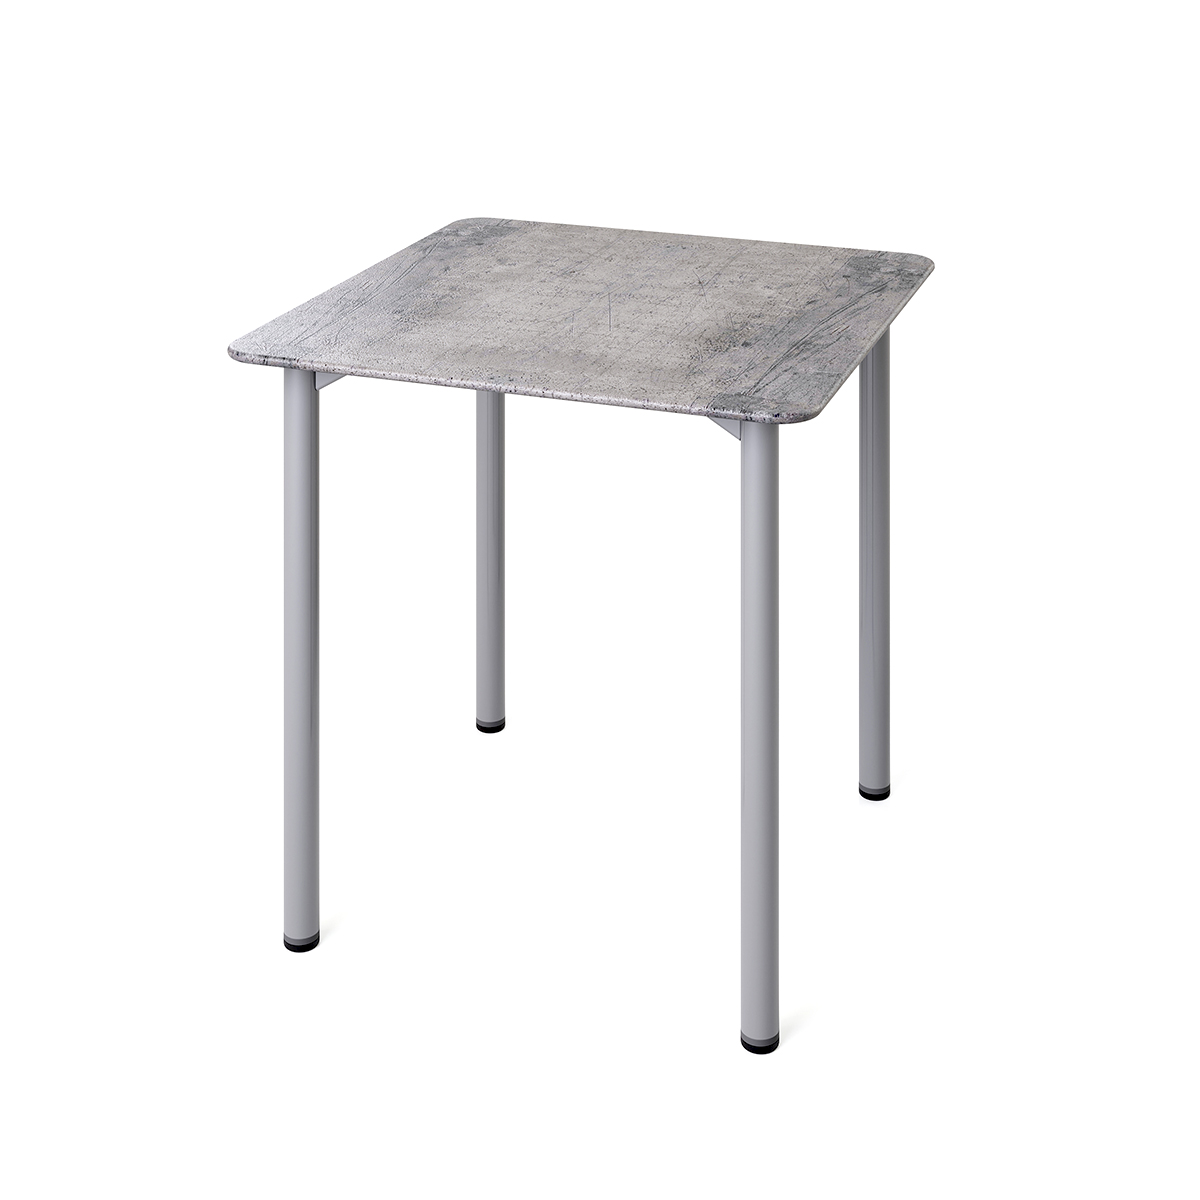 Flowform® Outdoor Square Table